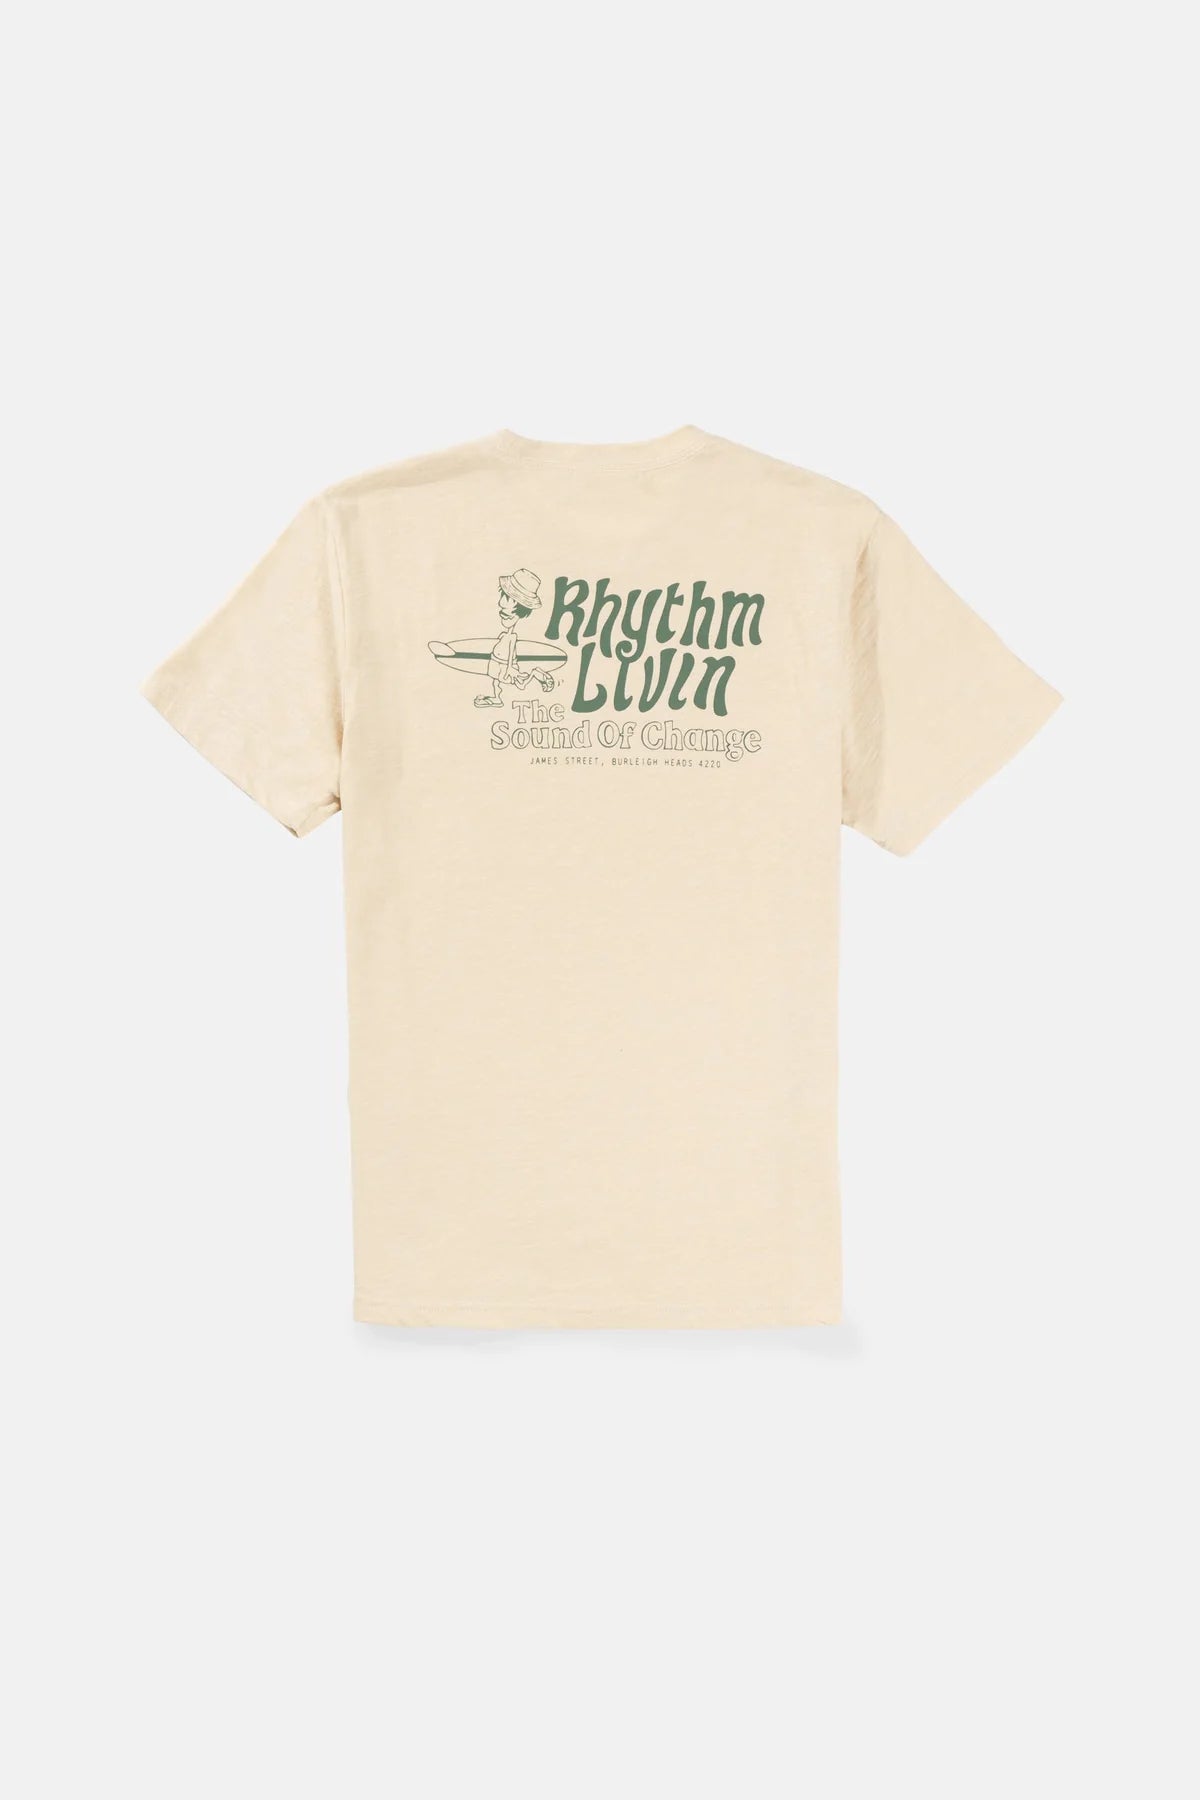 Livin Slub Ss T-Shirt Natural | Men Collective